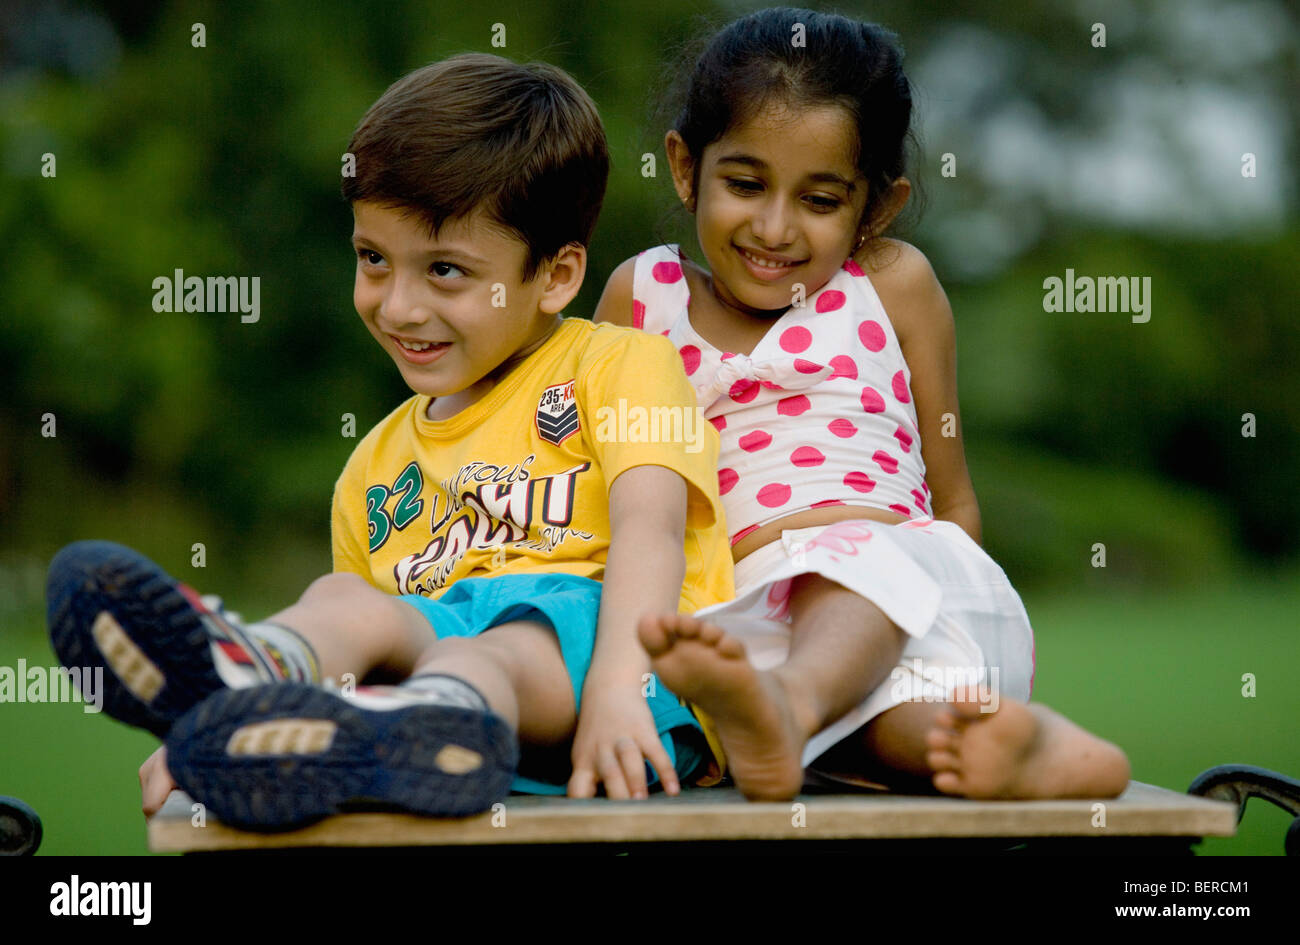 Children at picnic Stock Photo